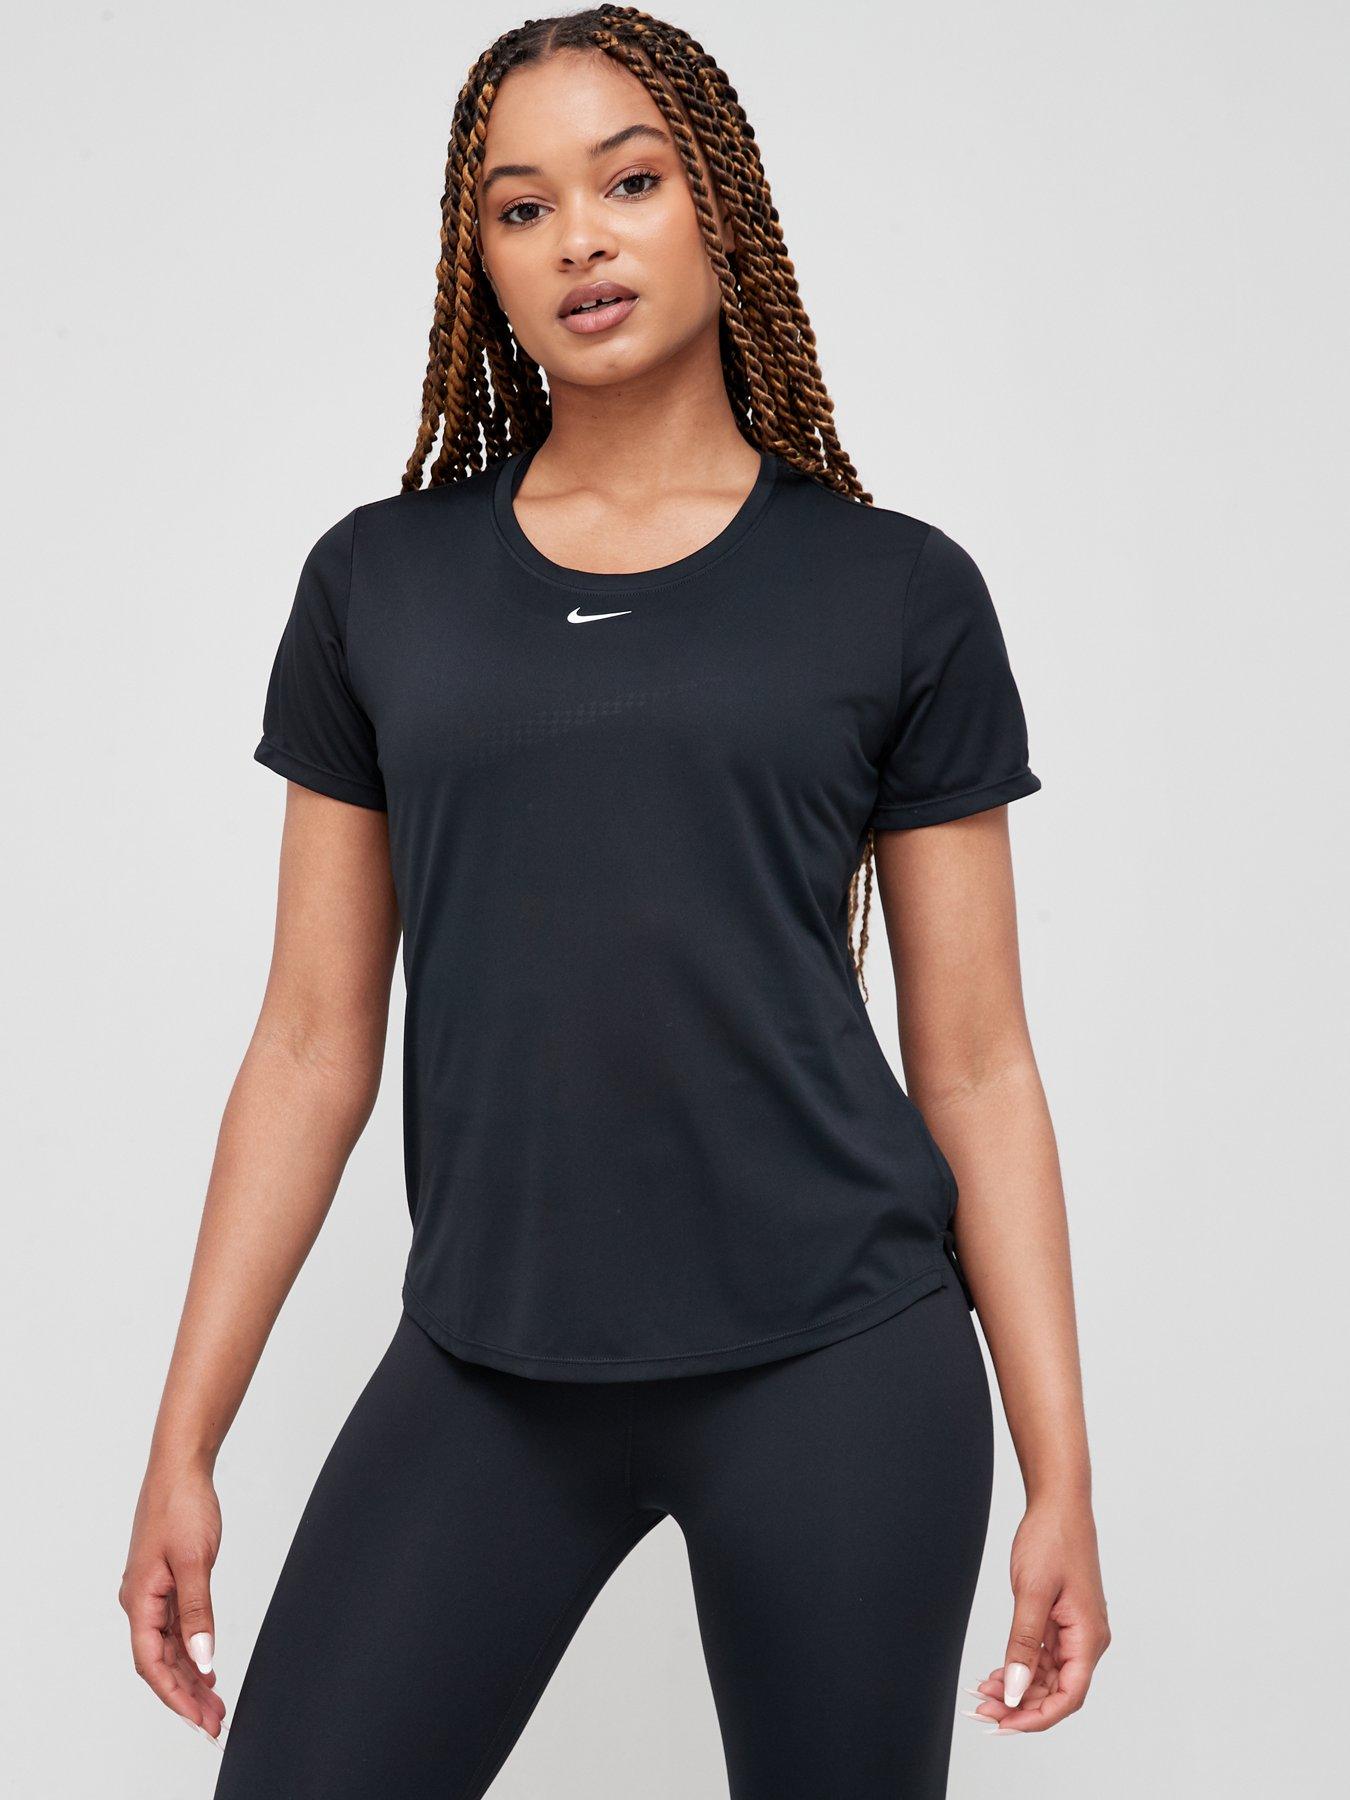 Nike The One Dri-FIT T-shirt - Black